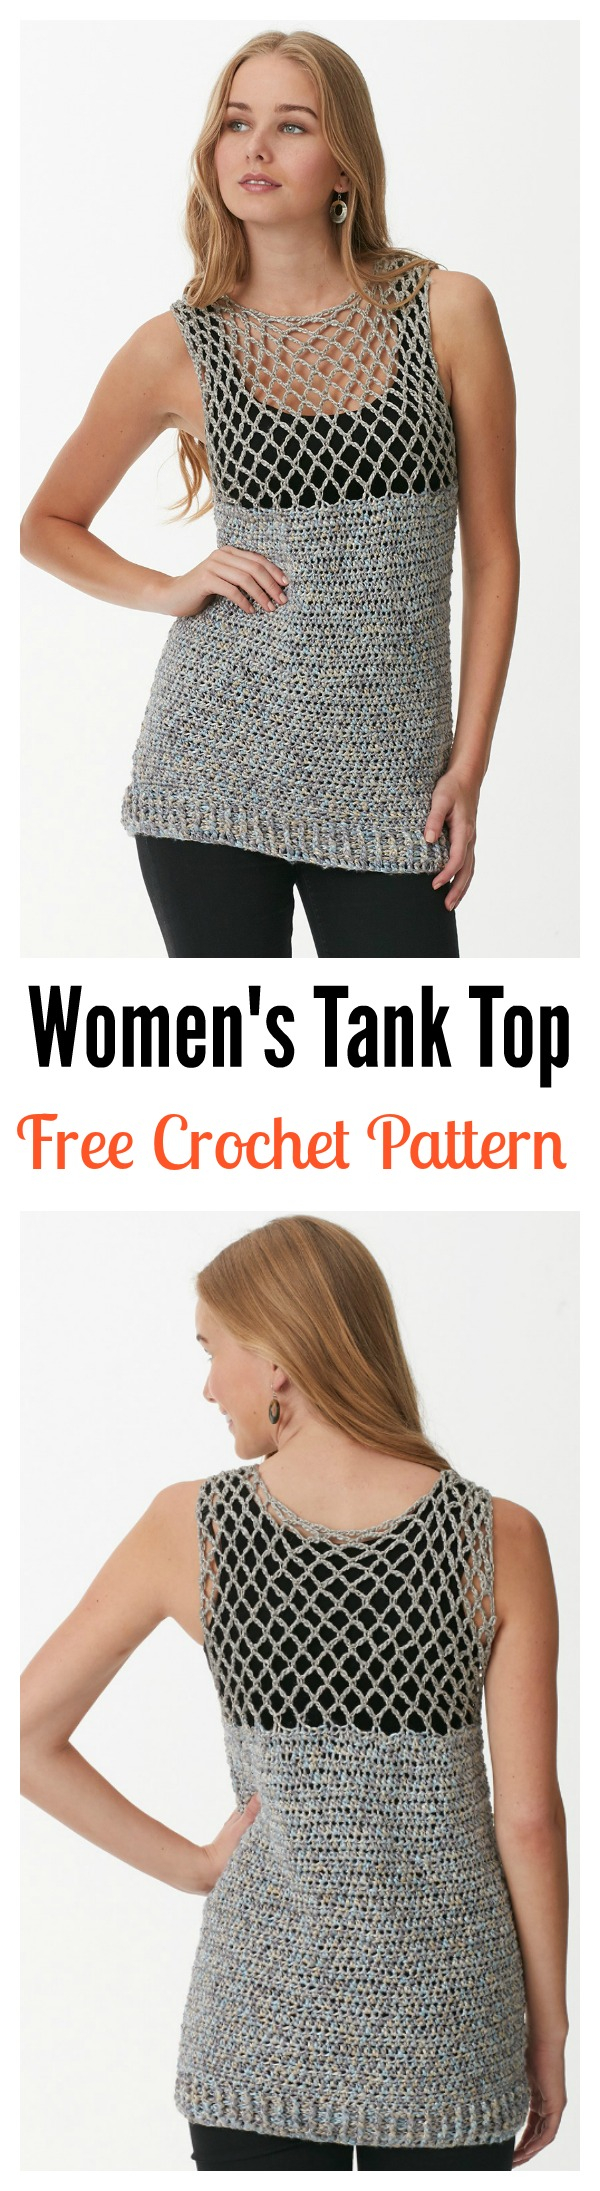 Free Crochet Tank Top Patterns Gorgeous Summer Crochet Top Free Patterns